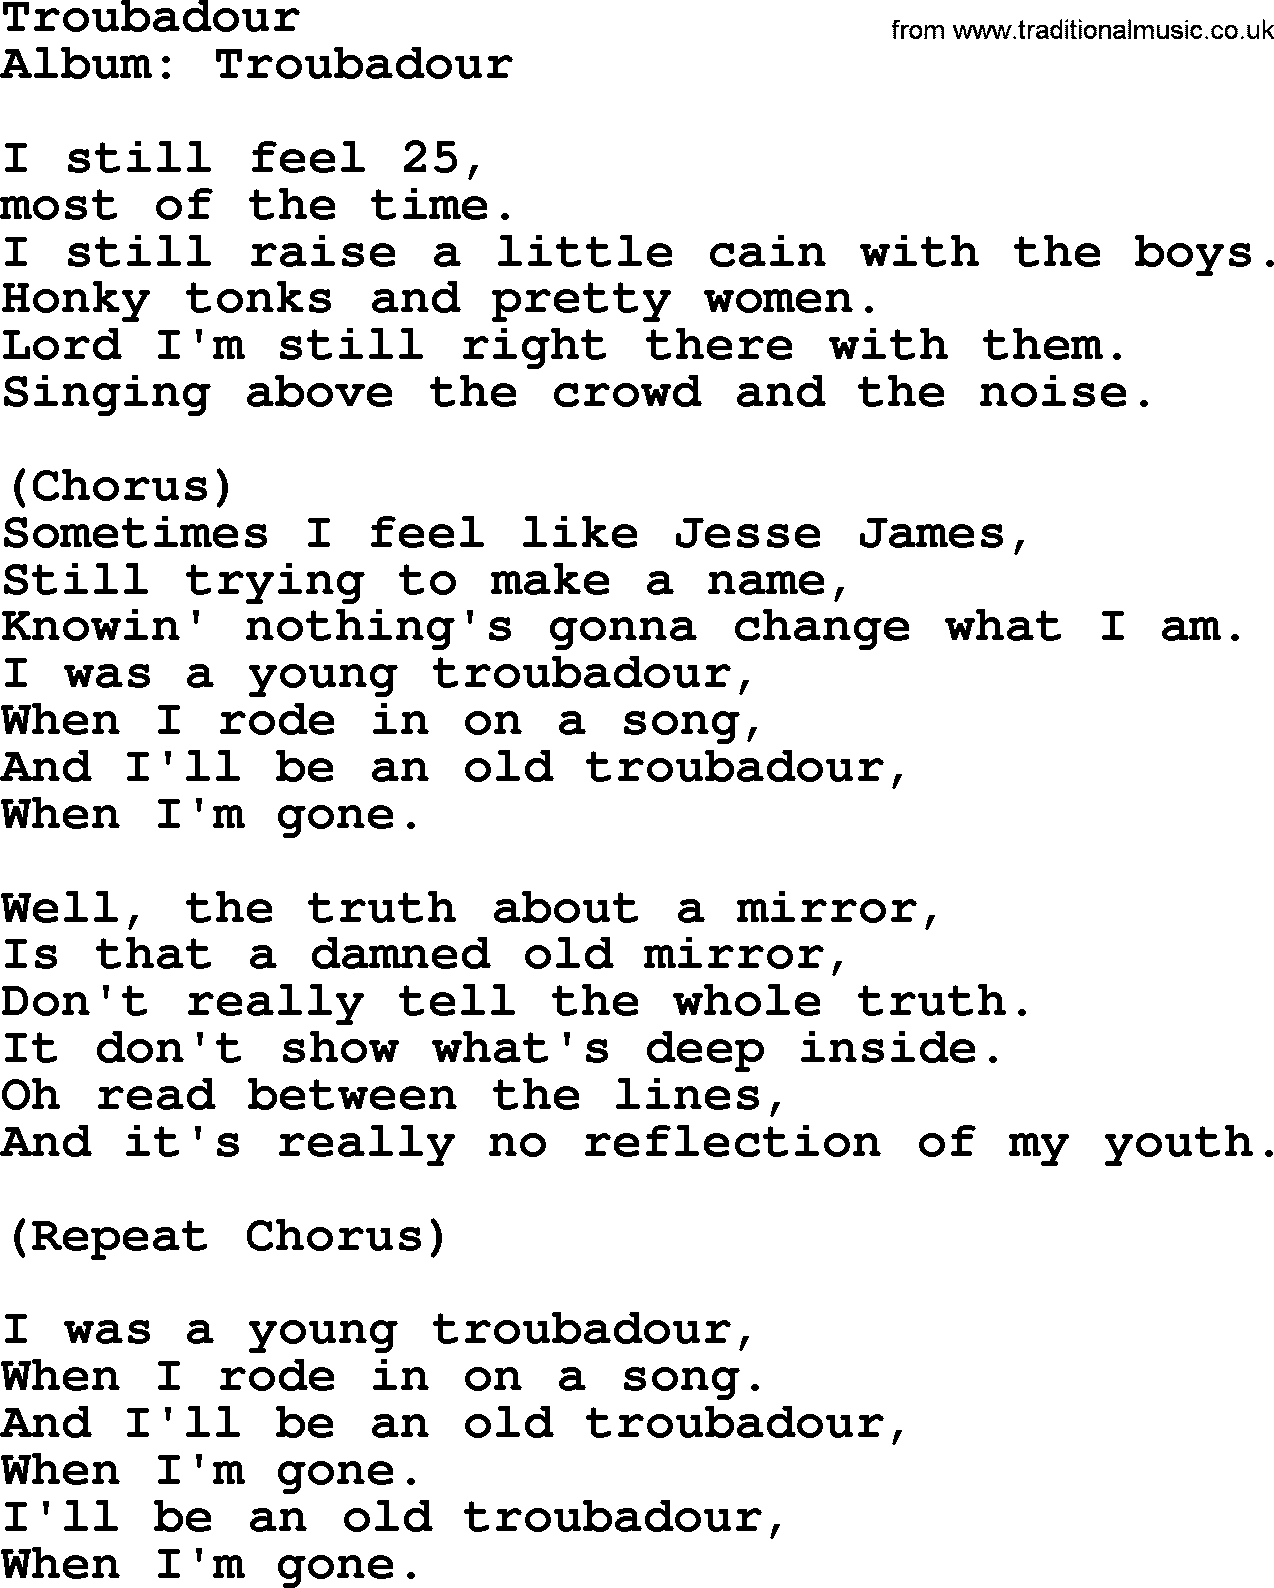 George Strait song: Troubadour, lyrics